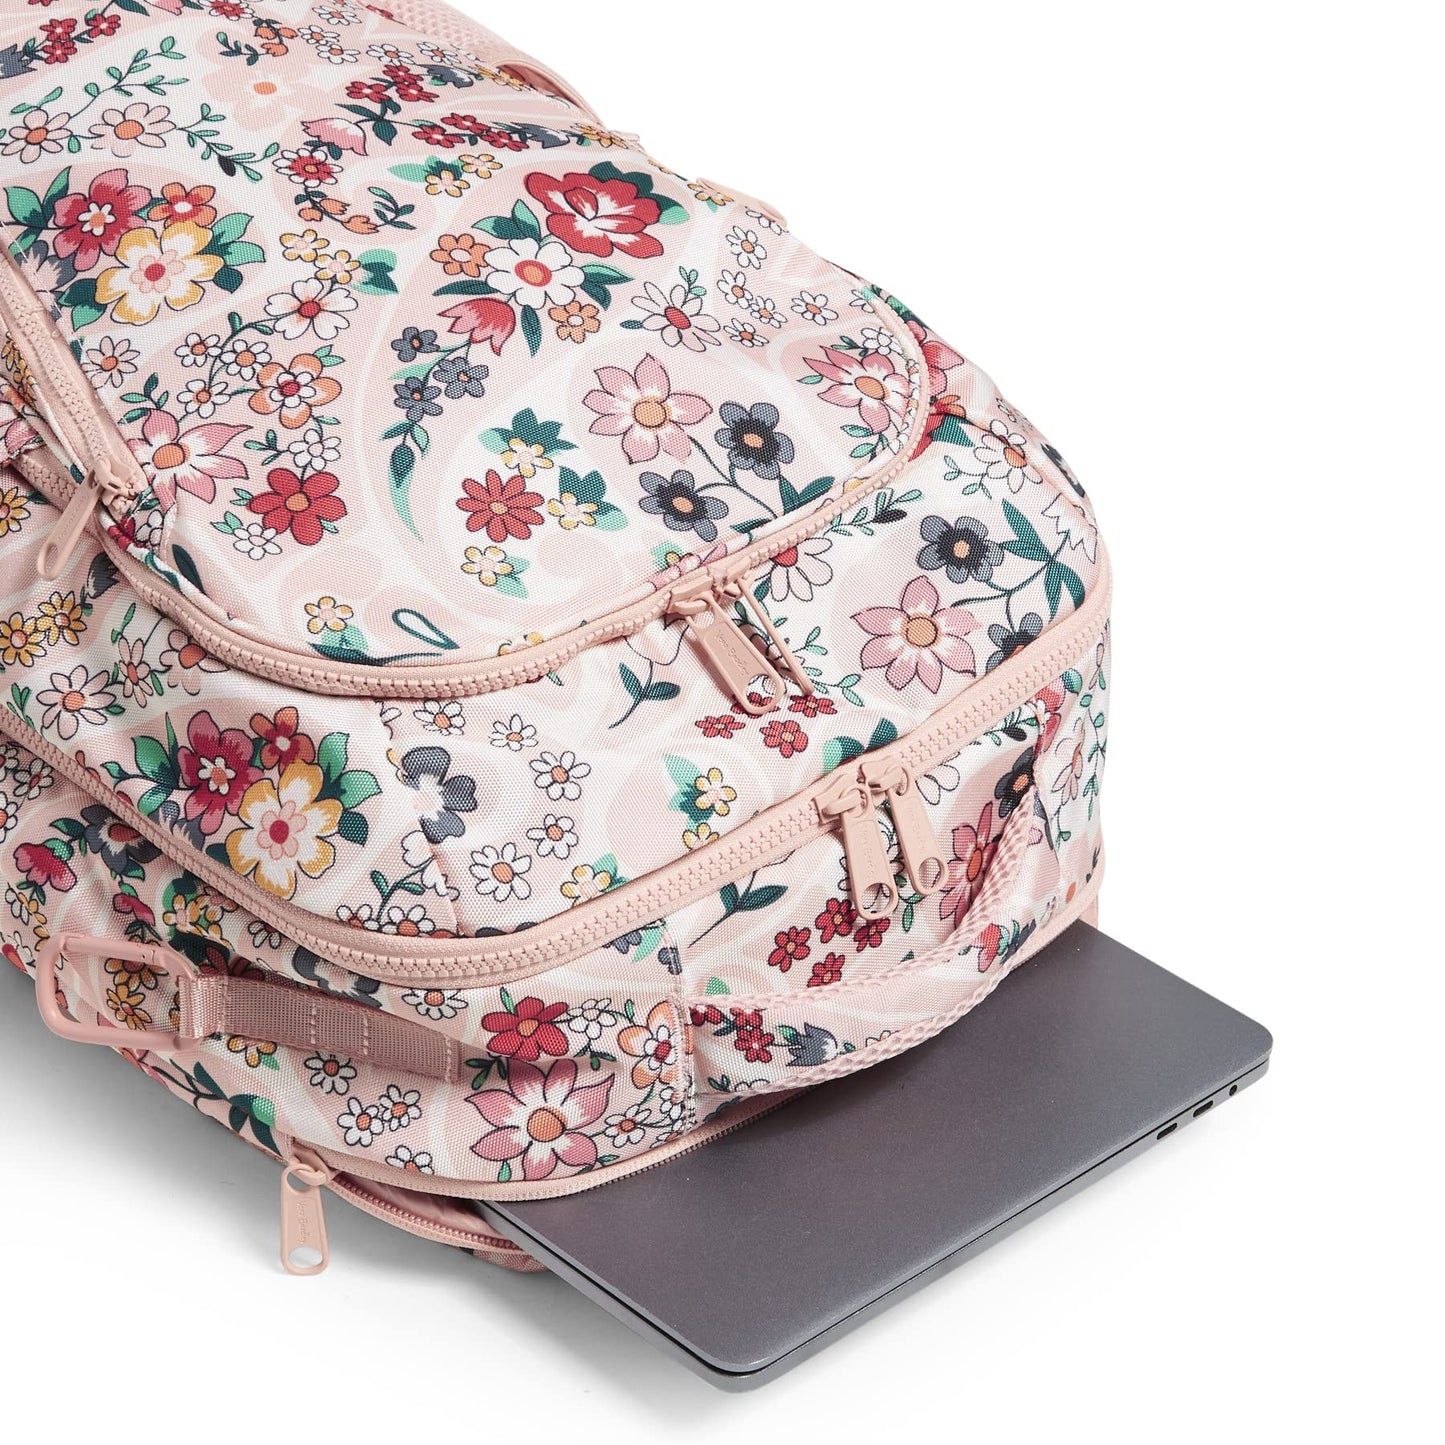 Vera Bradley Women's Recycled Lighten Up Reactive Lay Flat Backpack Travel Bag